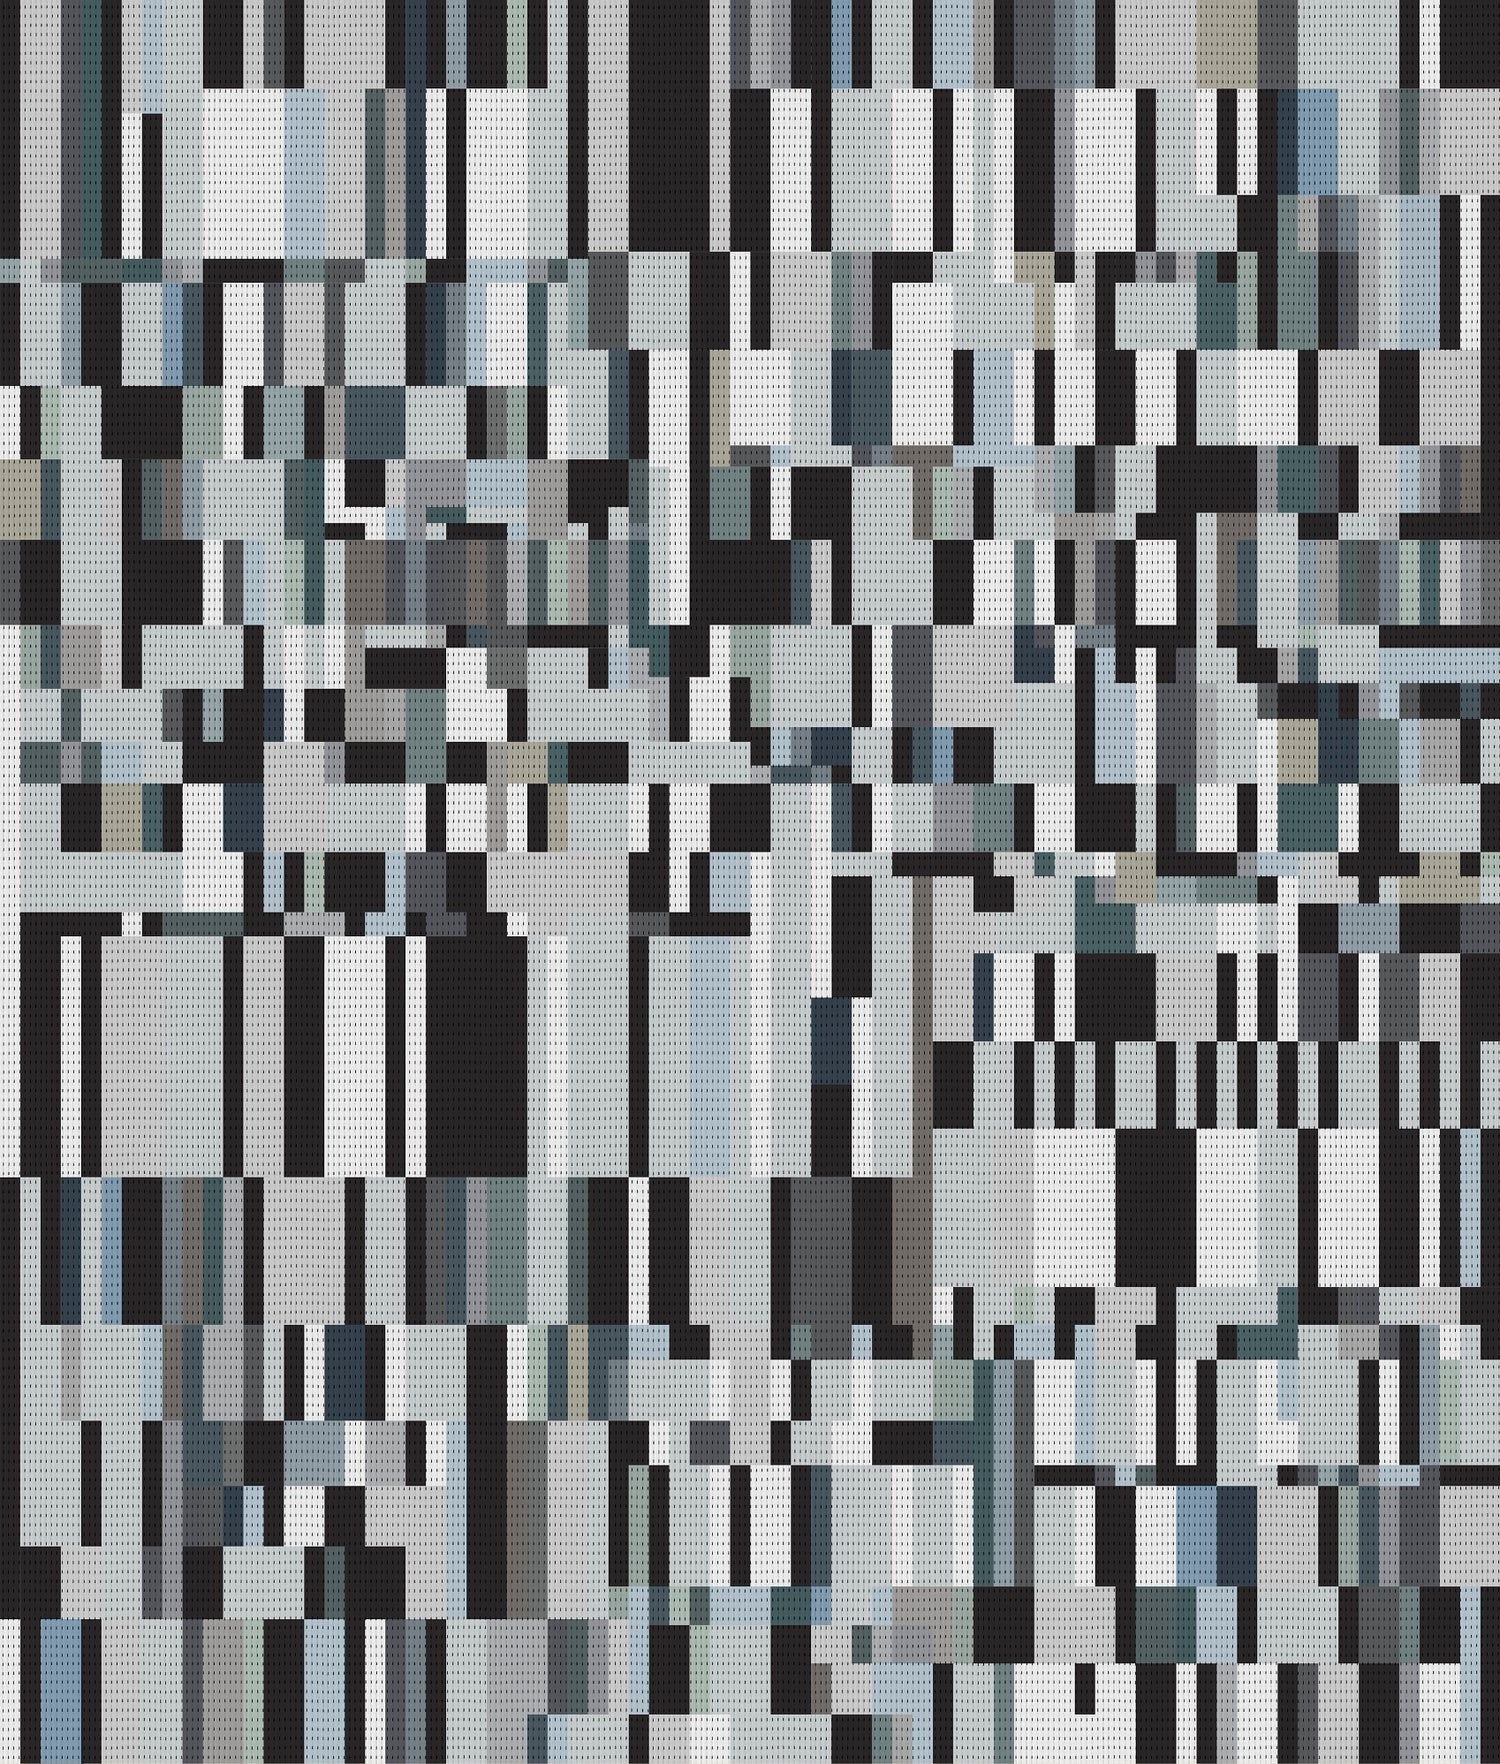 Designtex Pixel 3826-801 Stonescape, Large